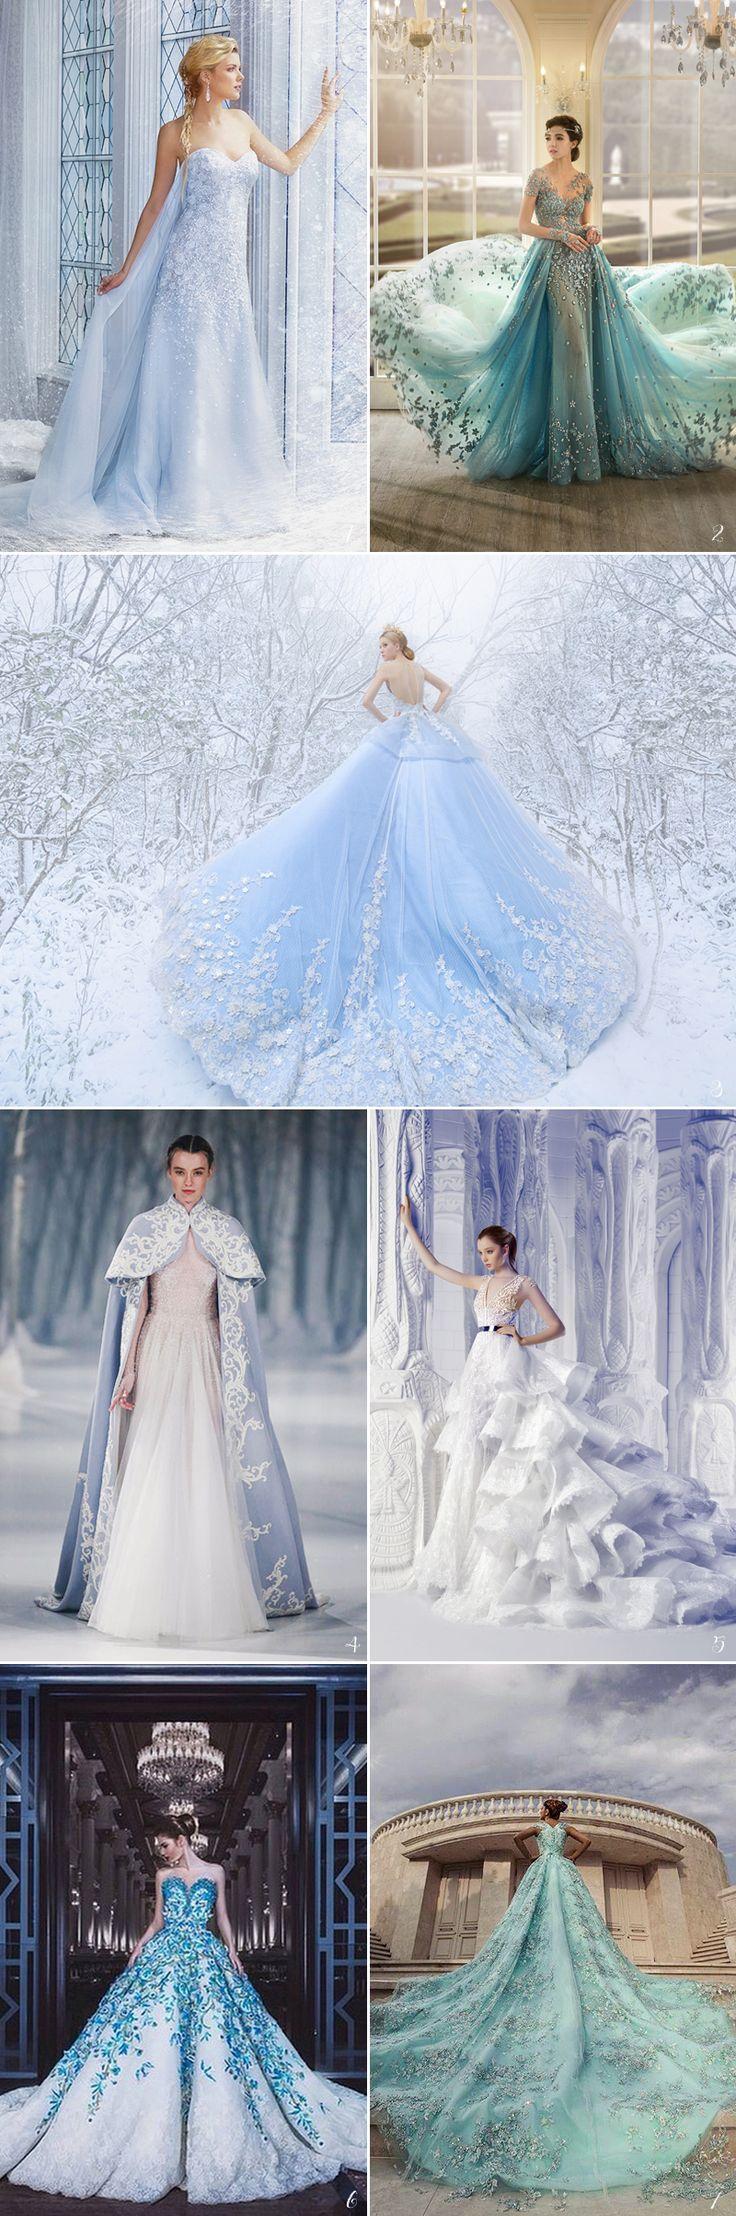 زفاف - 42 Fairy Tale Wedding Dresses For The Disney Princess Bride